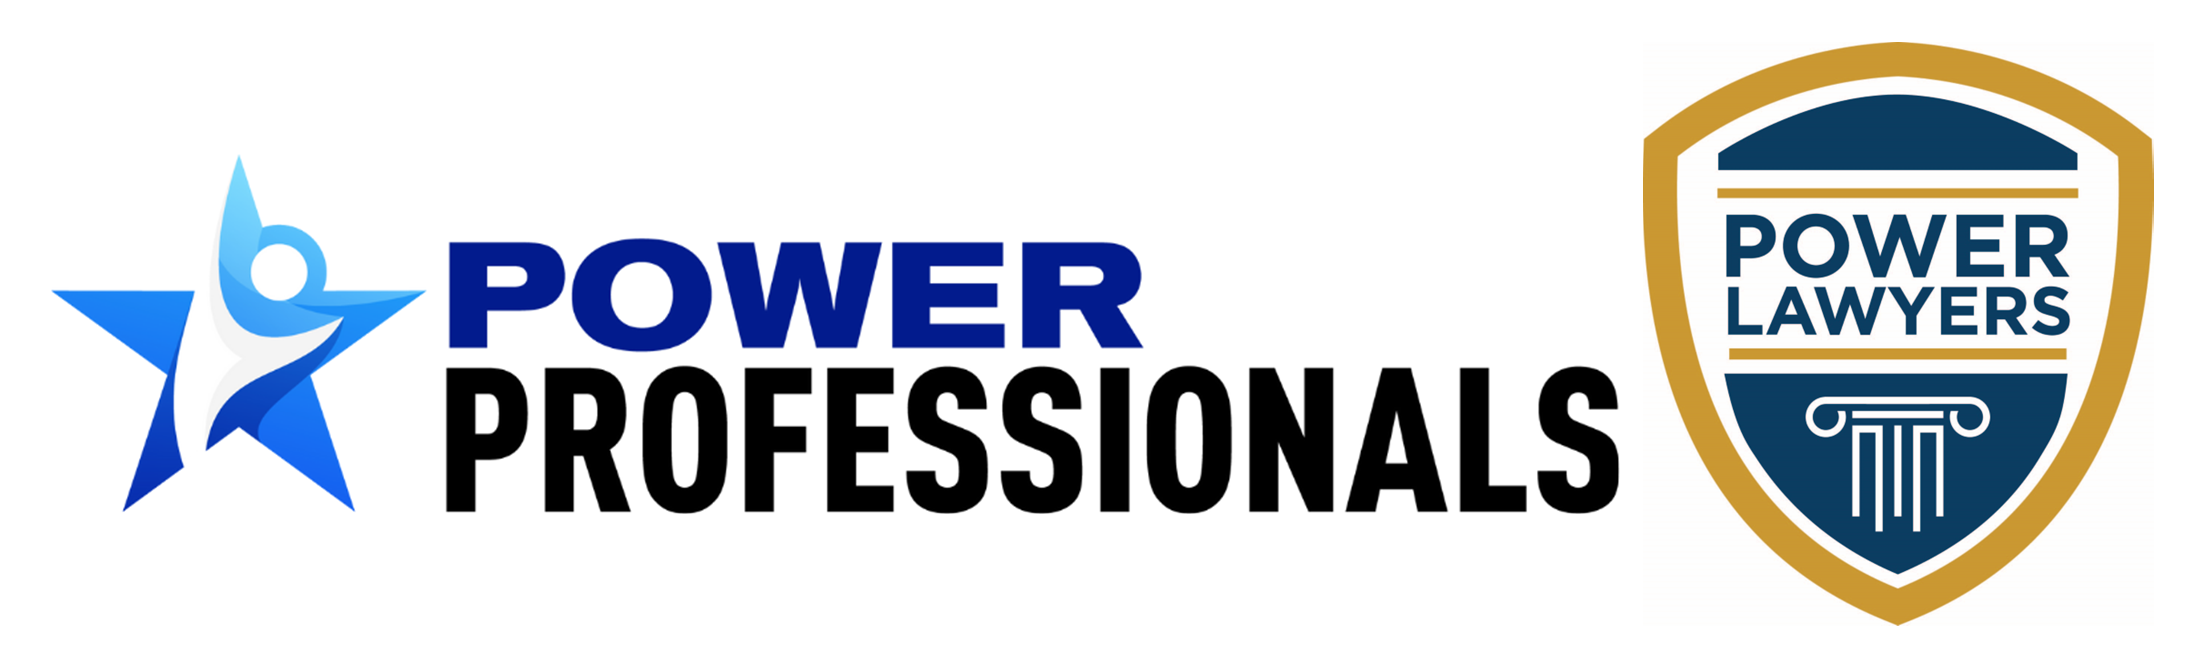 Power Professionals Power Lawyers Logo